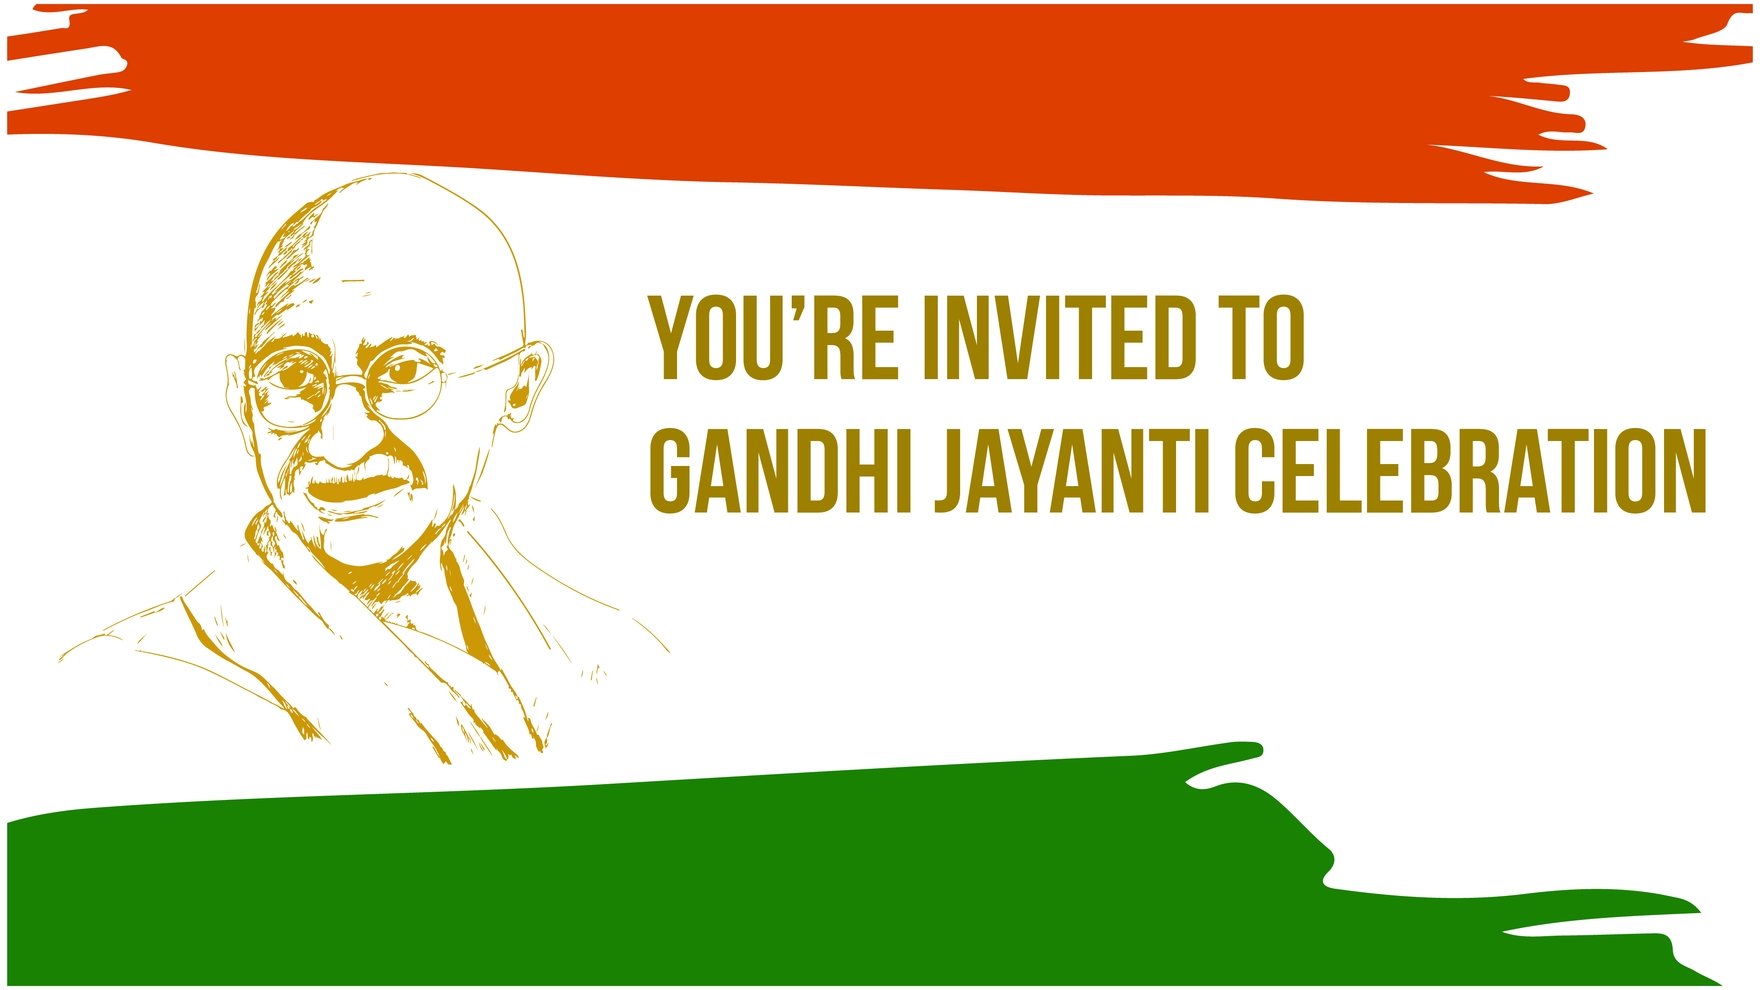 Gandhi Jayanti Invitation Background